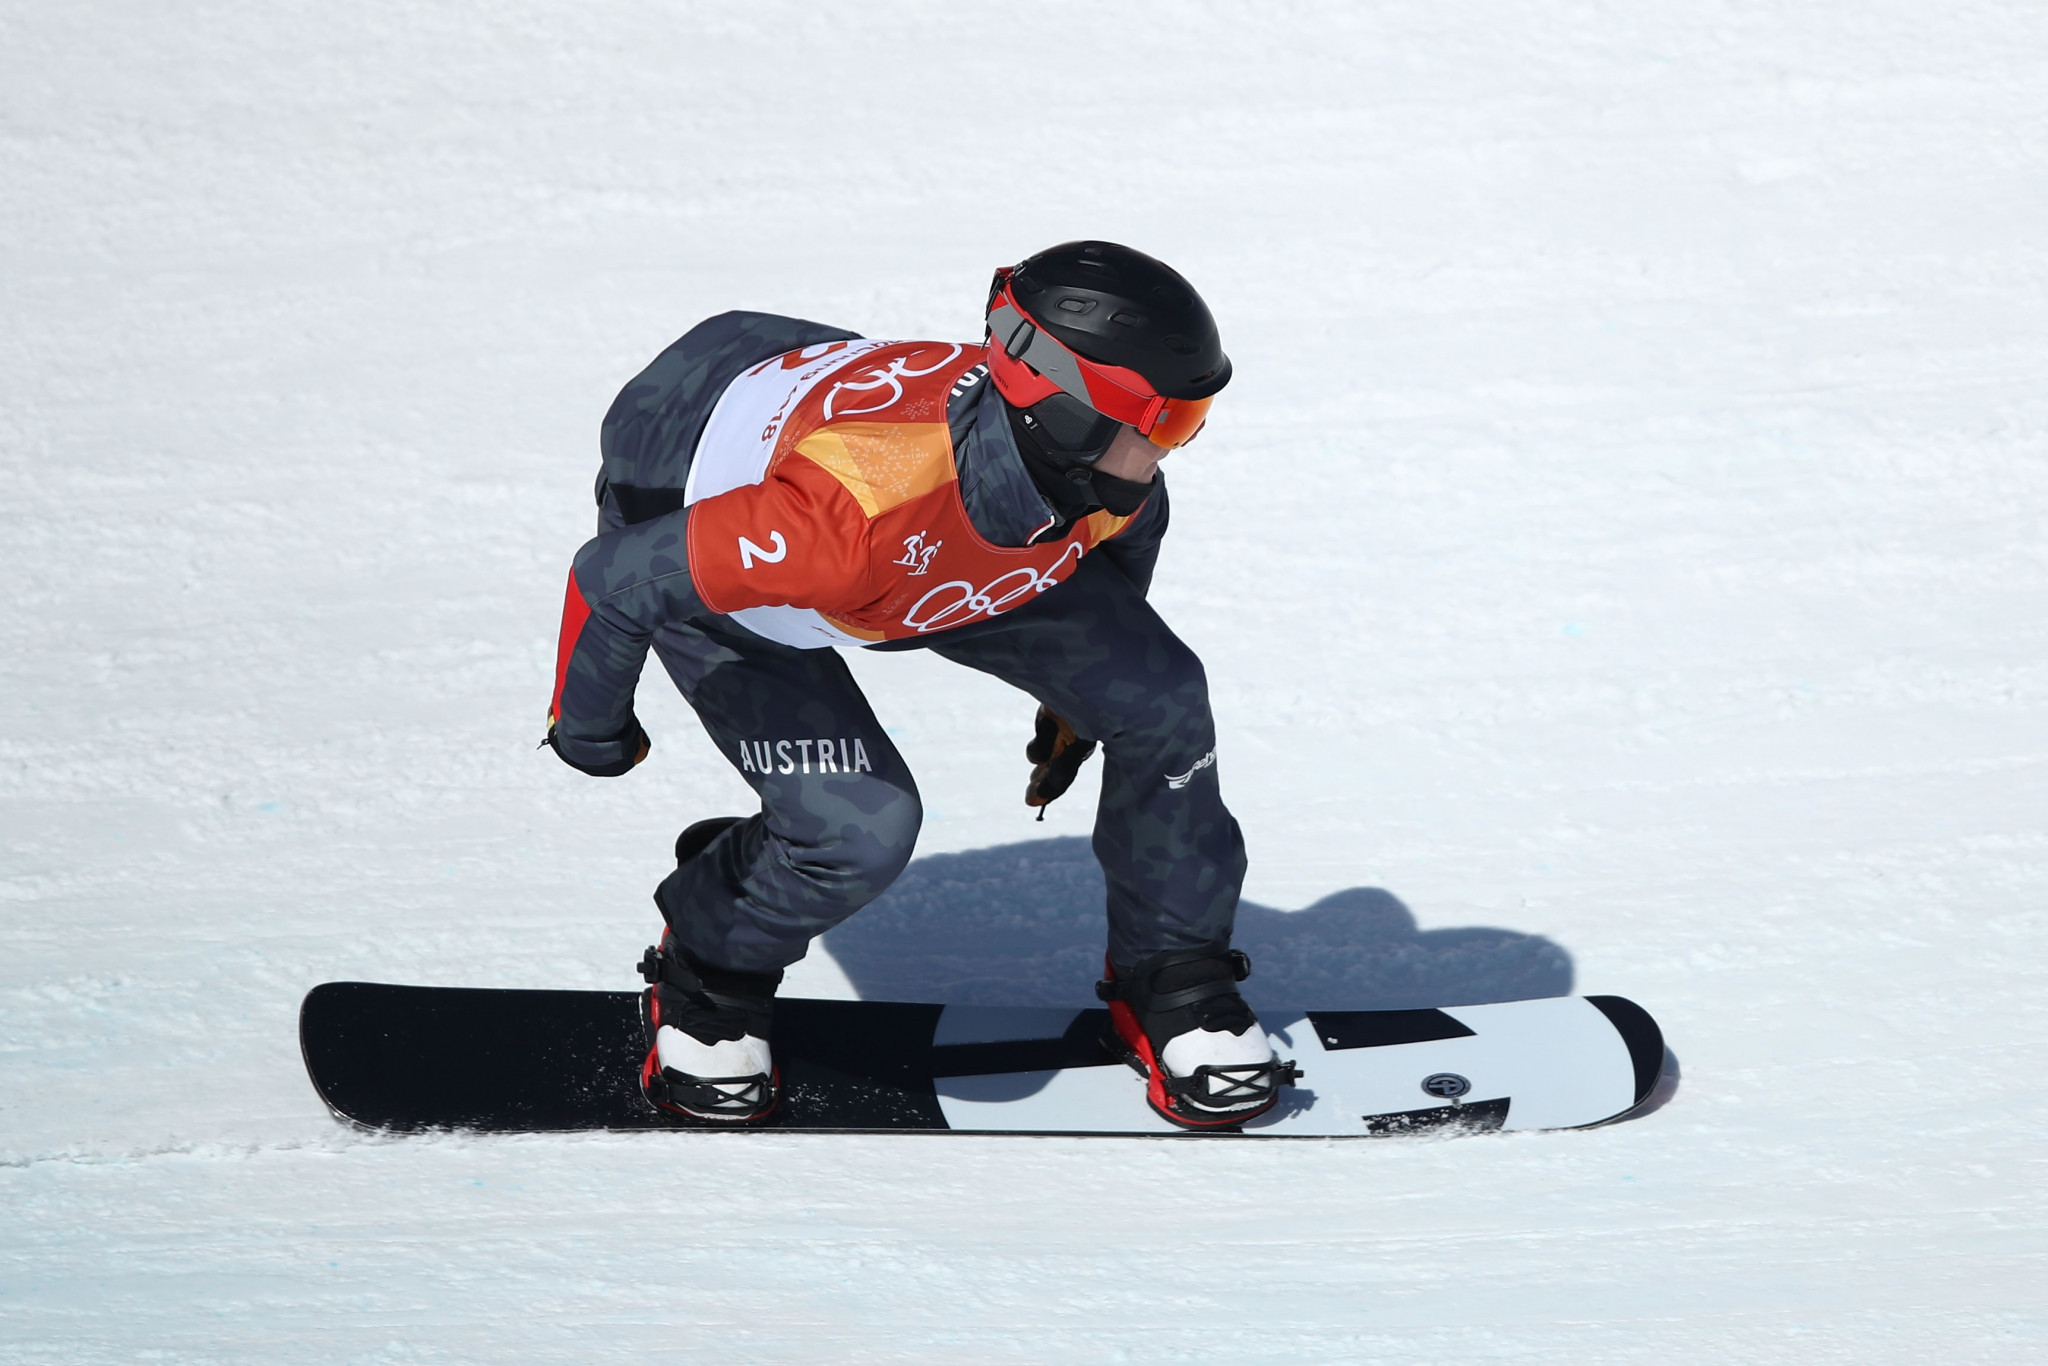 Montafon to host first mixed team event of Snowboard Cross World Cup season